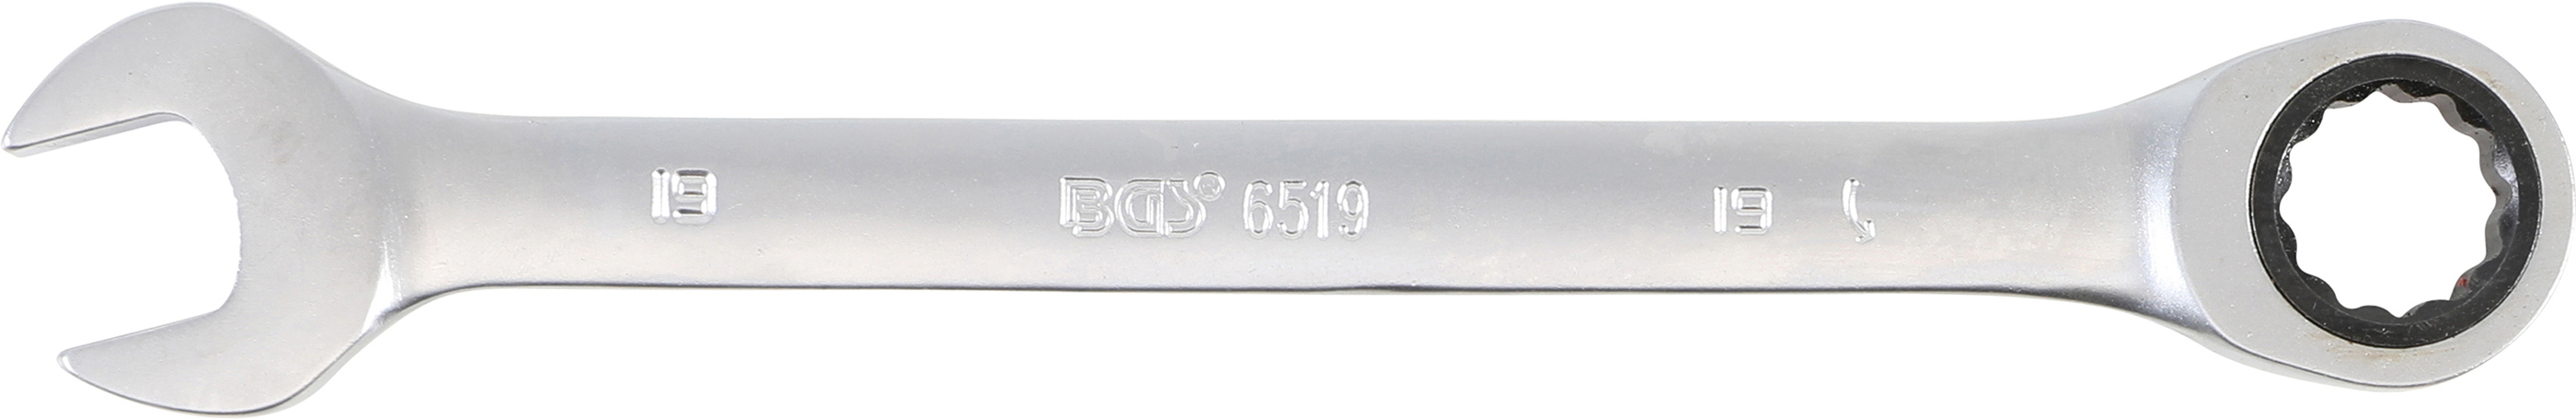 BGS 6519 Cheie combinată cu clichet | 19 mm